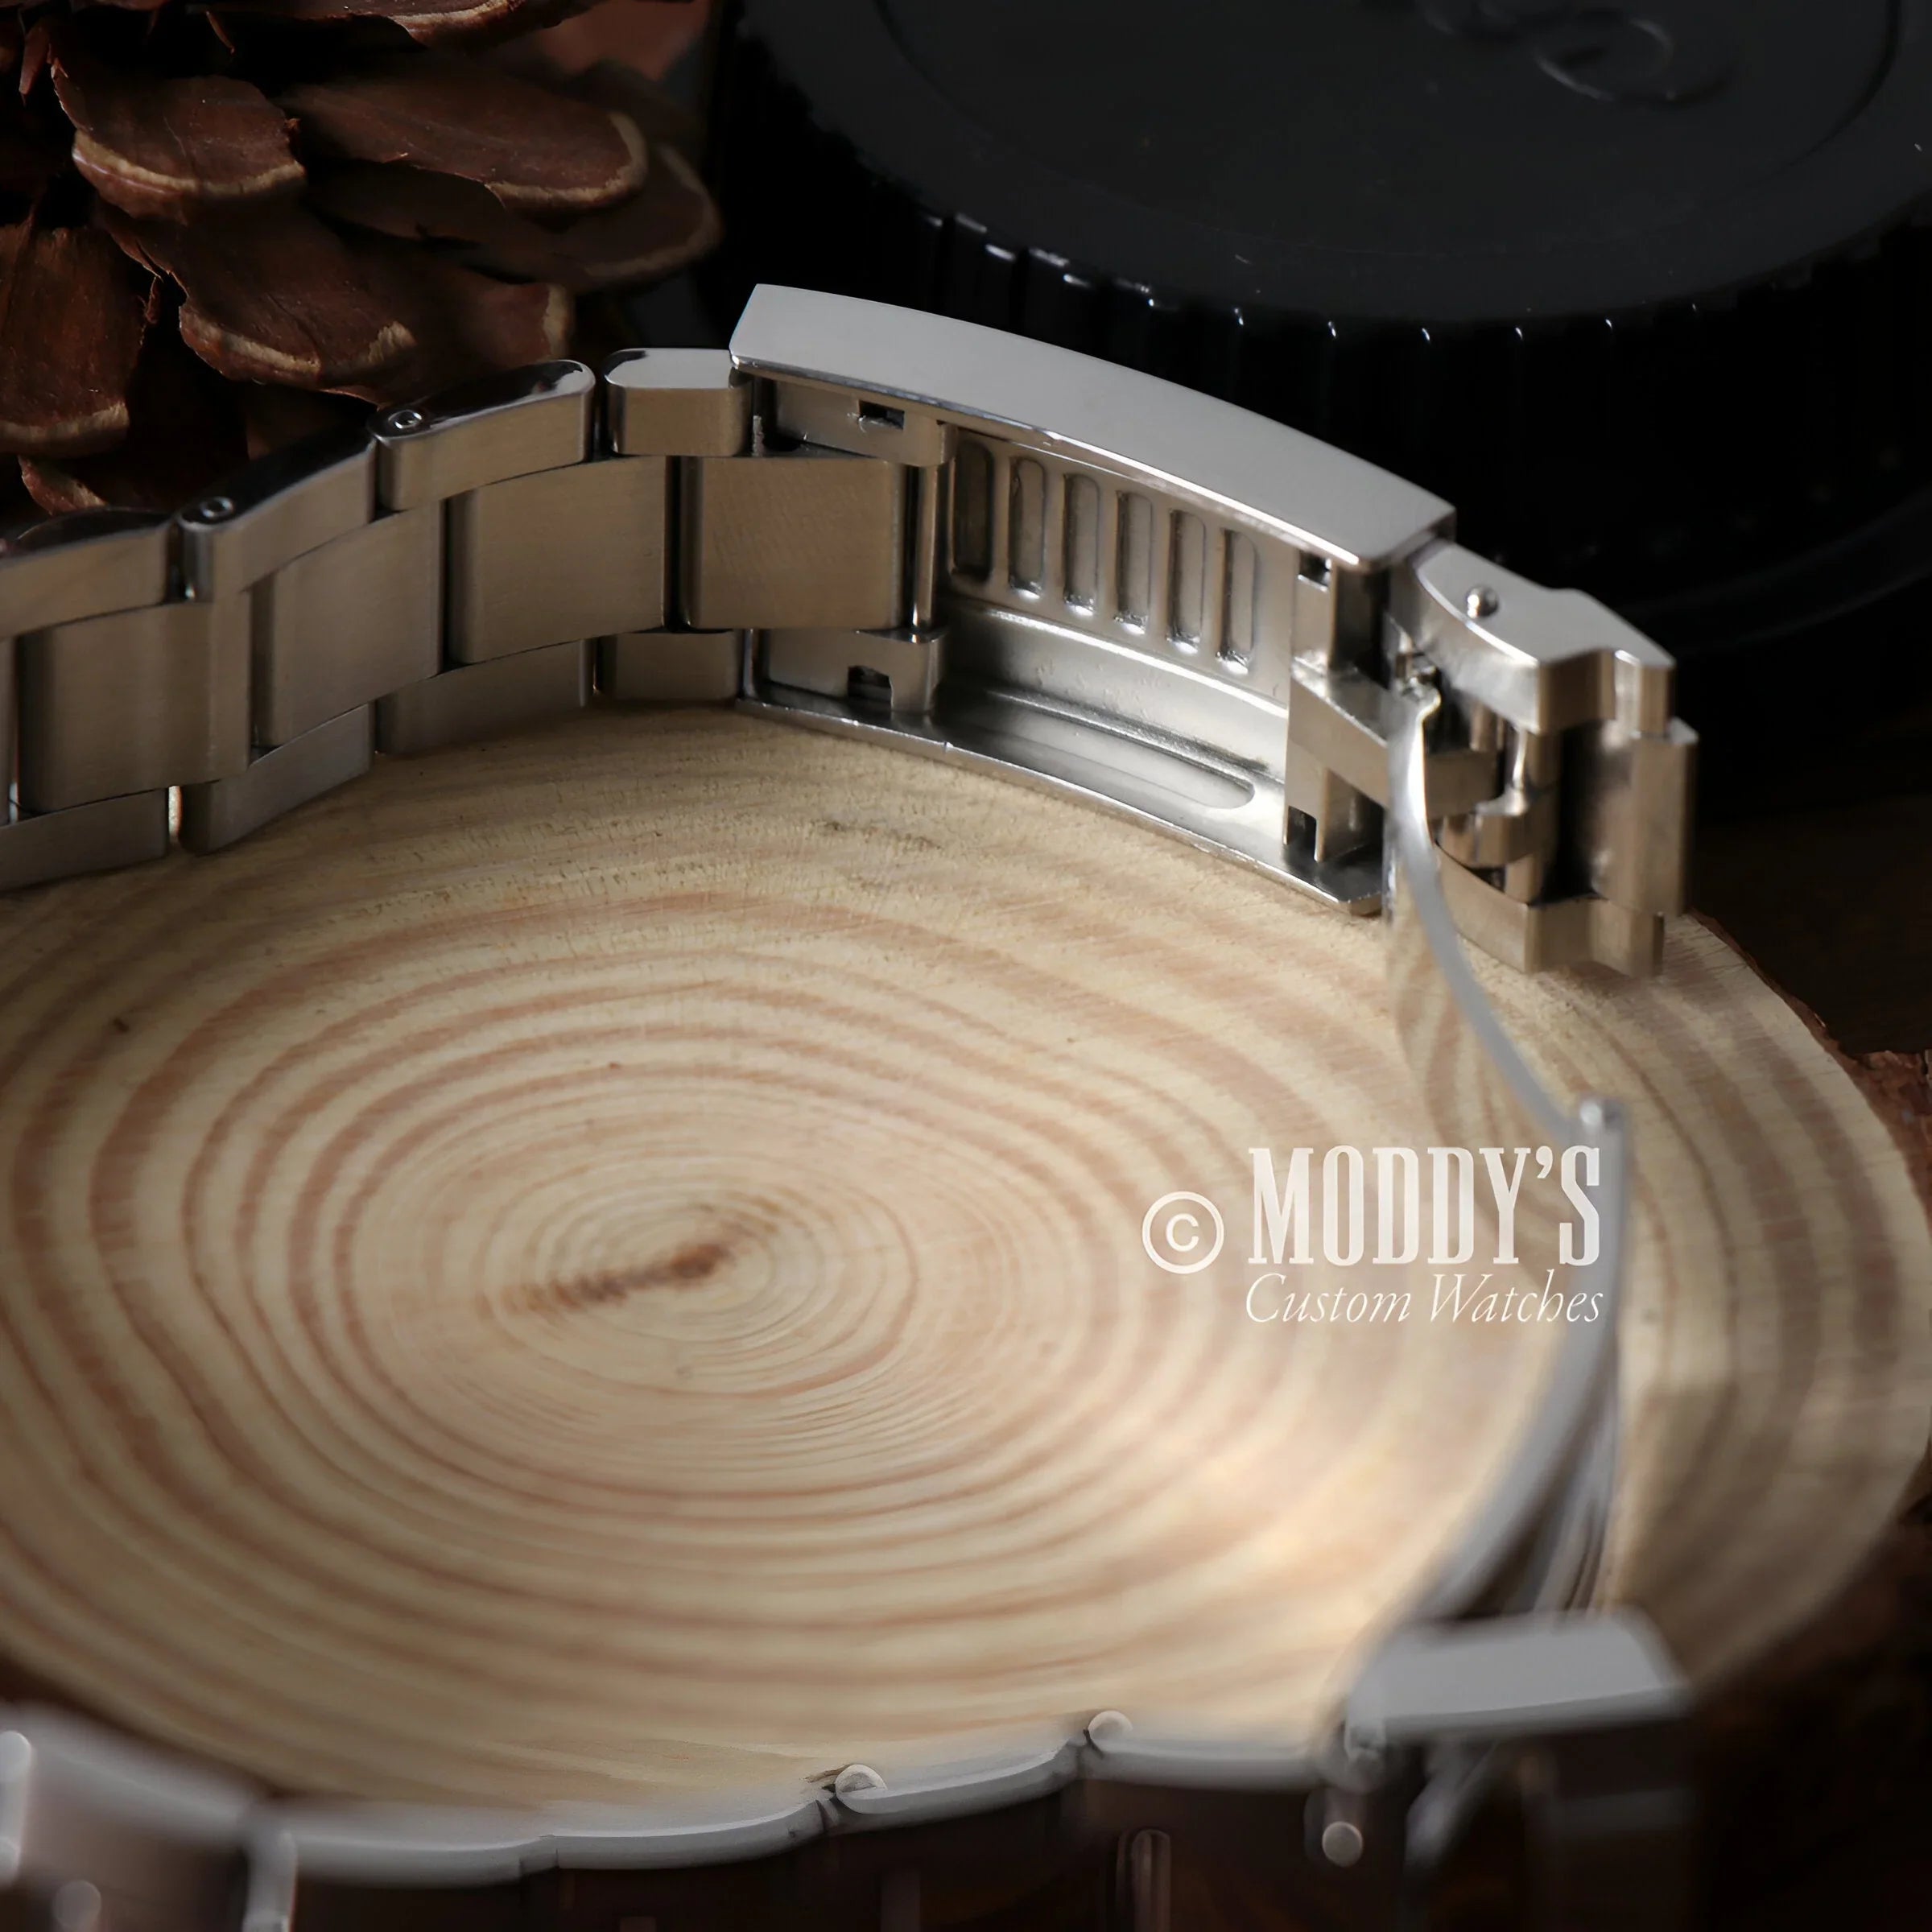 Seitona Platinum Hybrid Watch: Wooden Face, Metal Band, Inspired By Seiko Vk63 Design